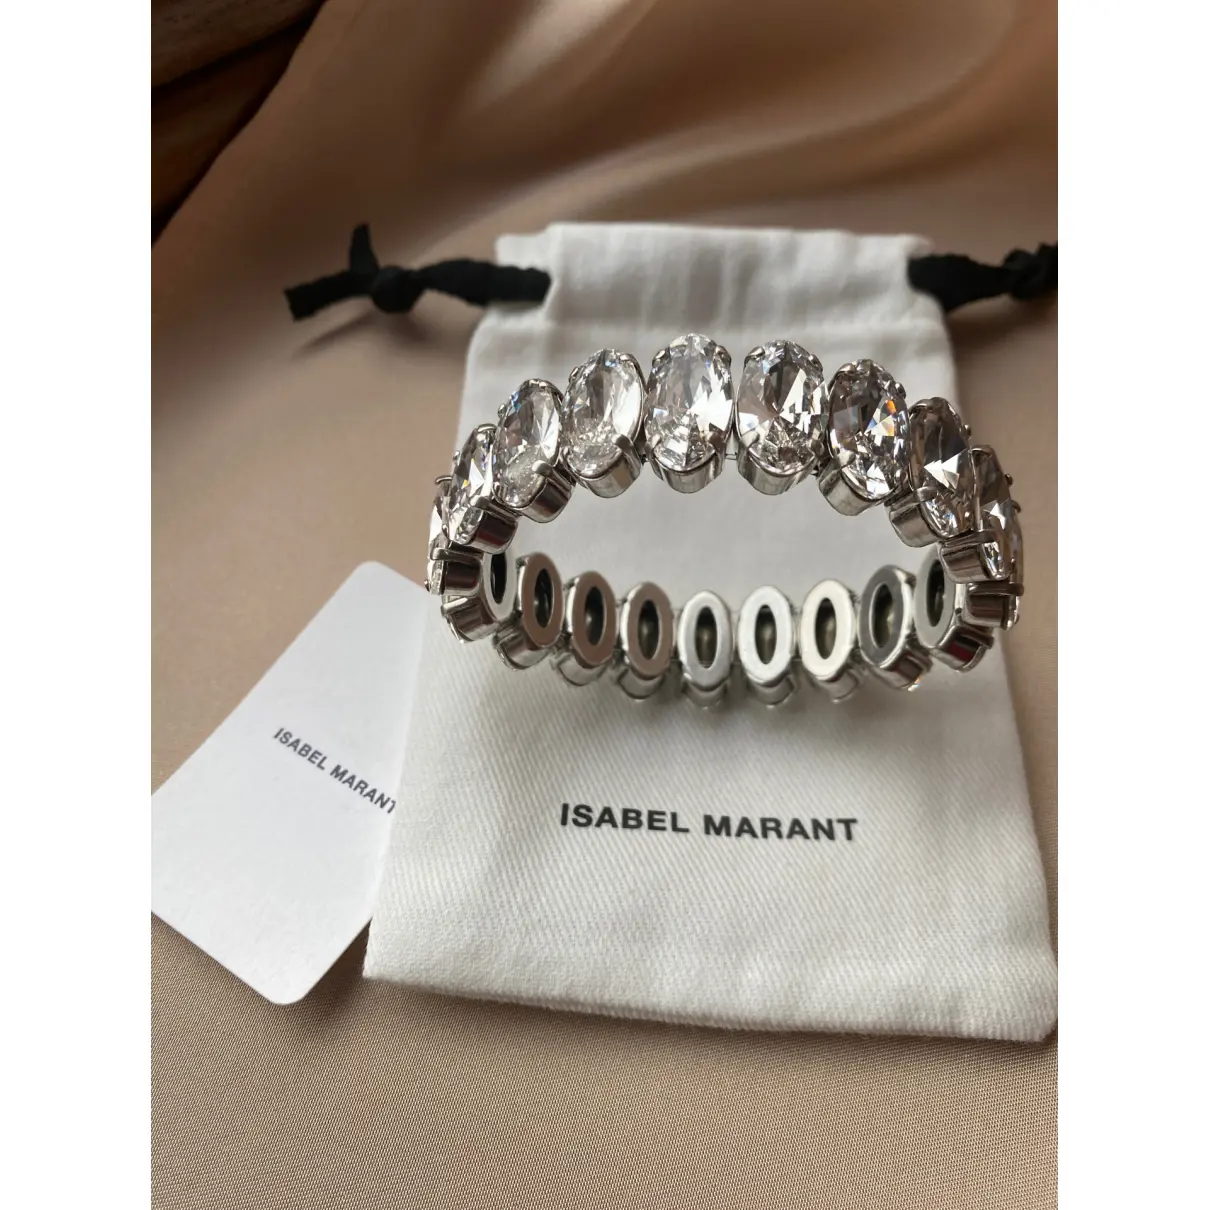 Buy Isabel Marant Bracelet online